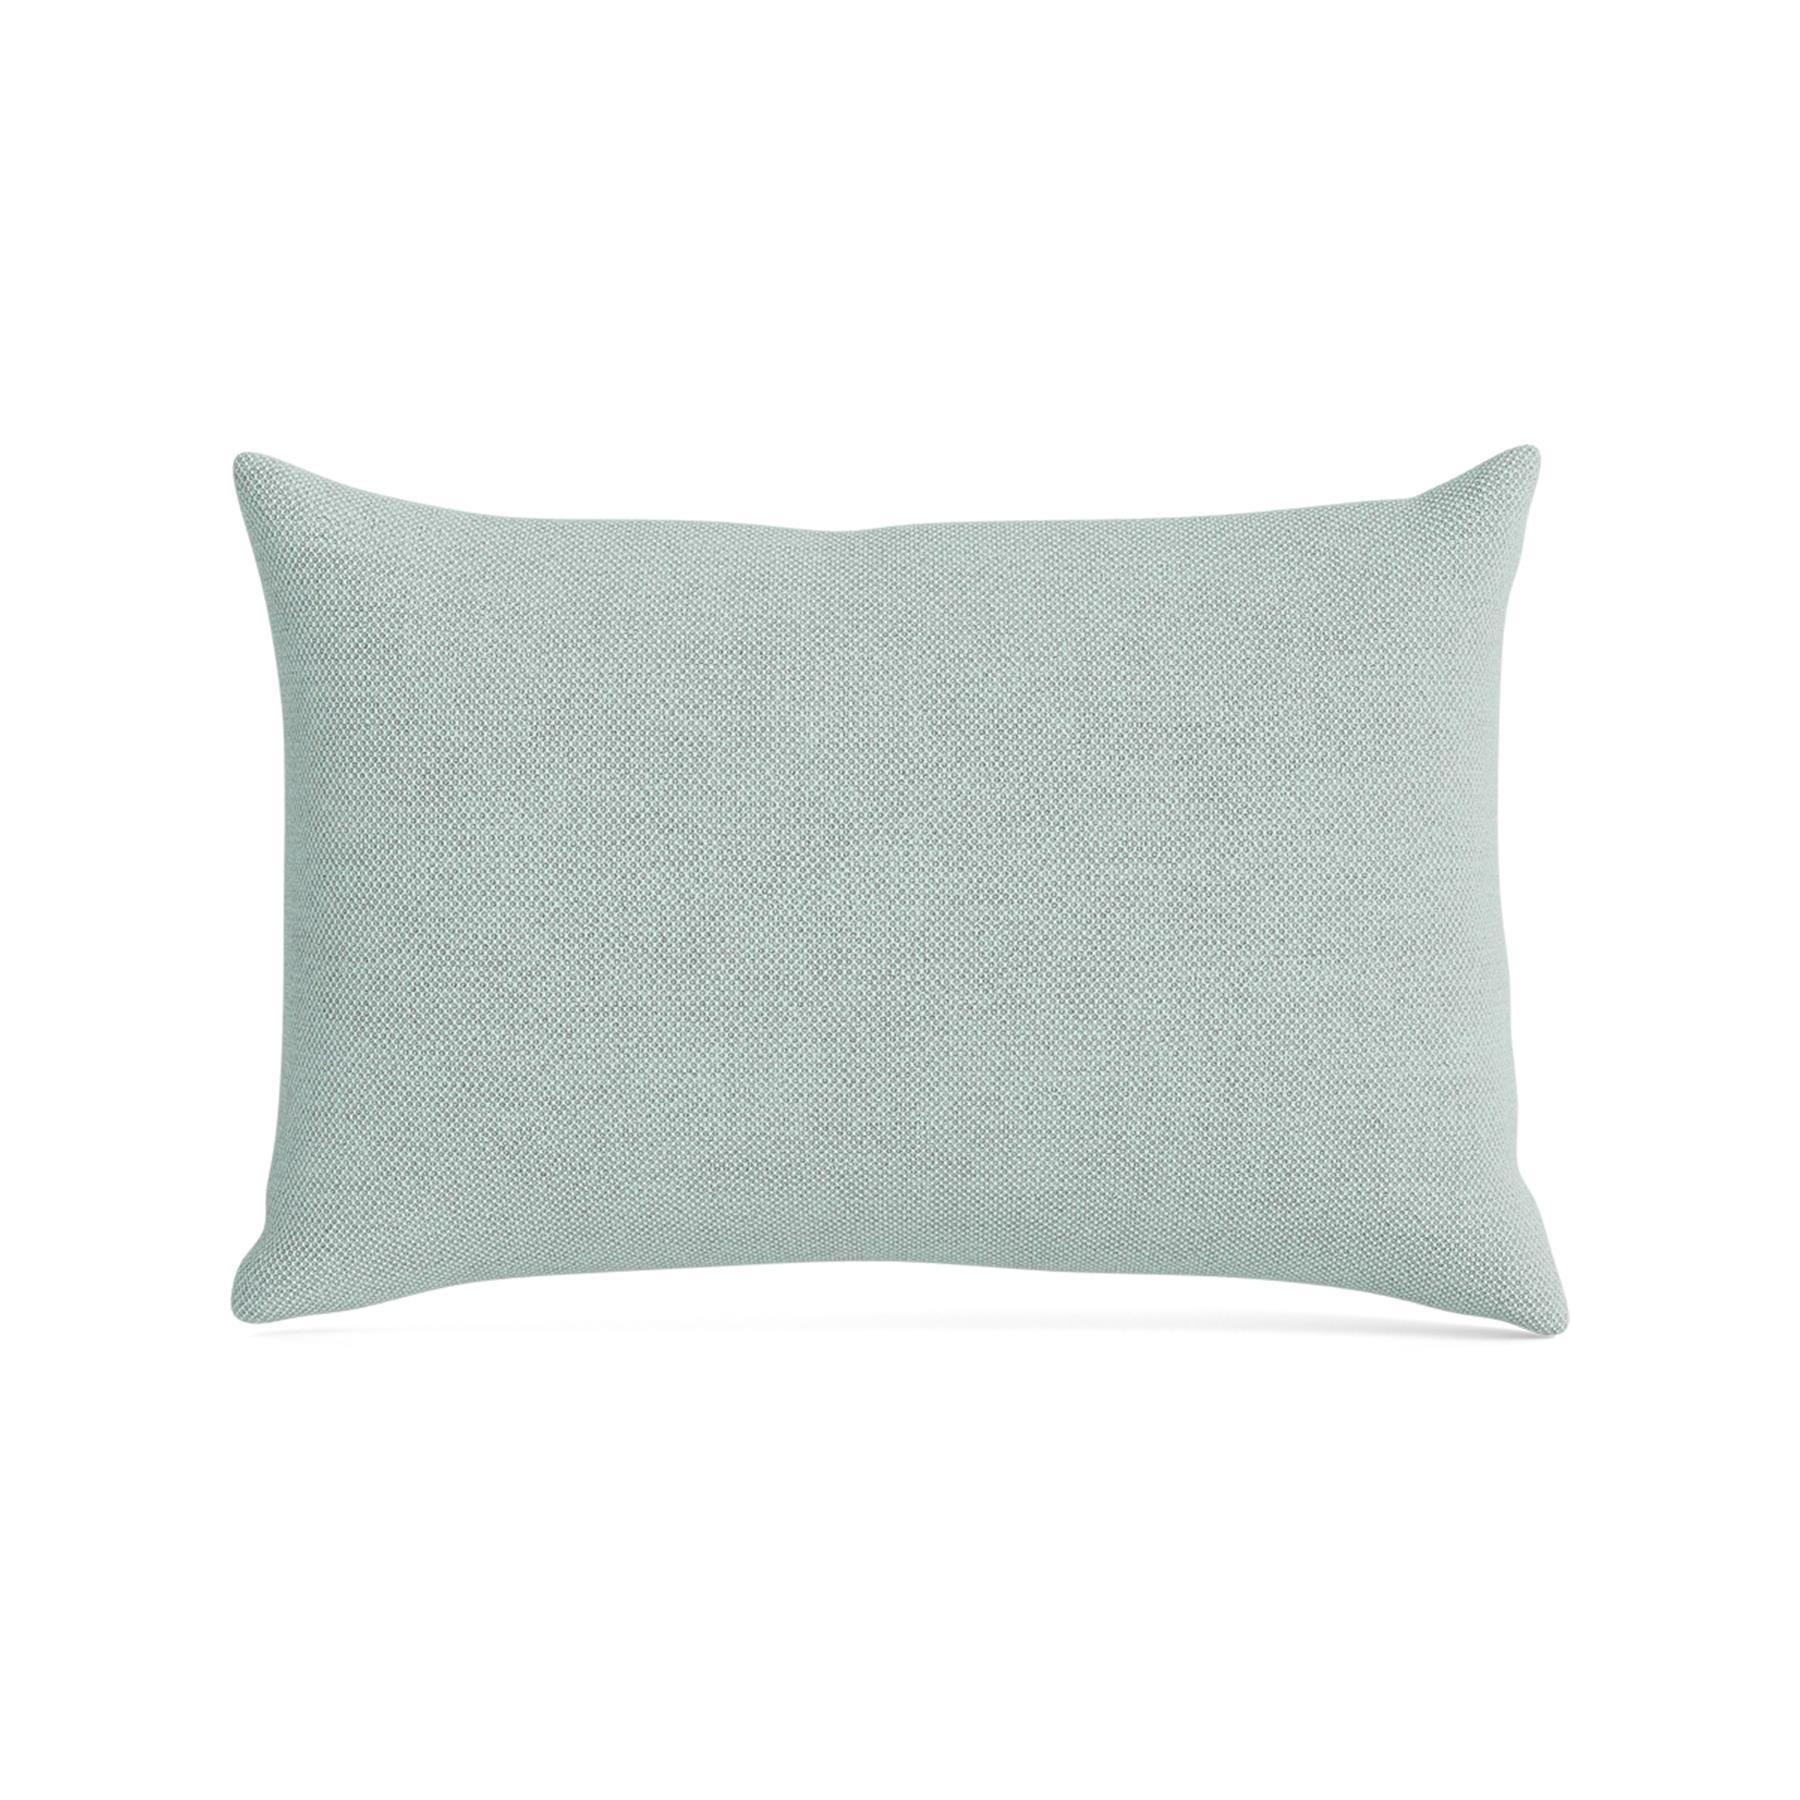 Make Nordic Pillow 40cmx60cm Fiord 721 Down And Fibers Blue